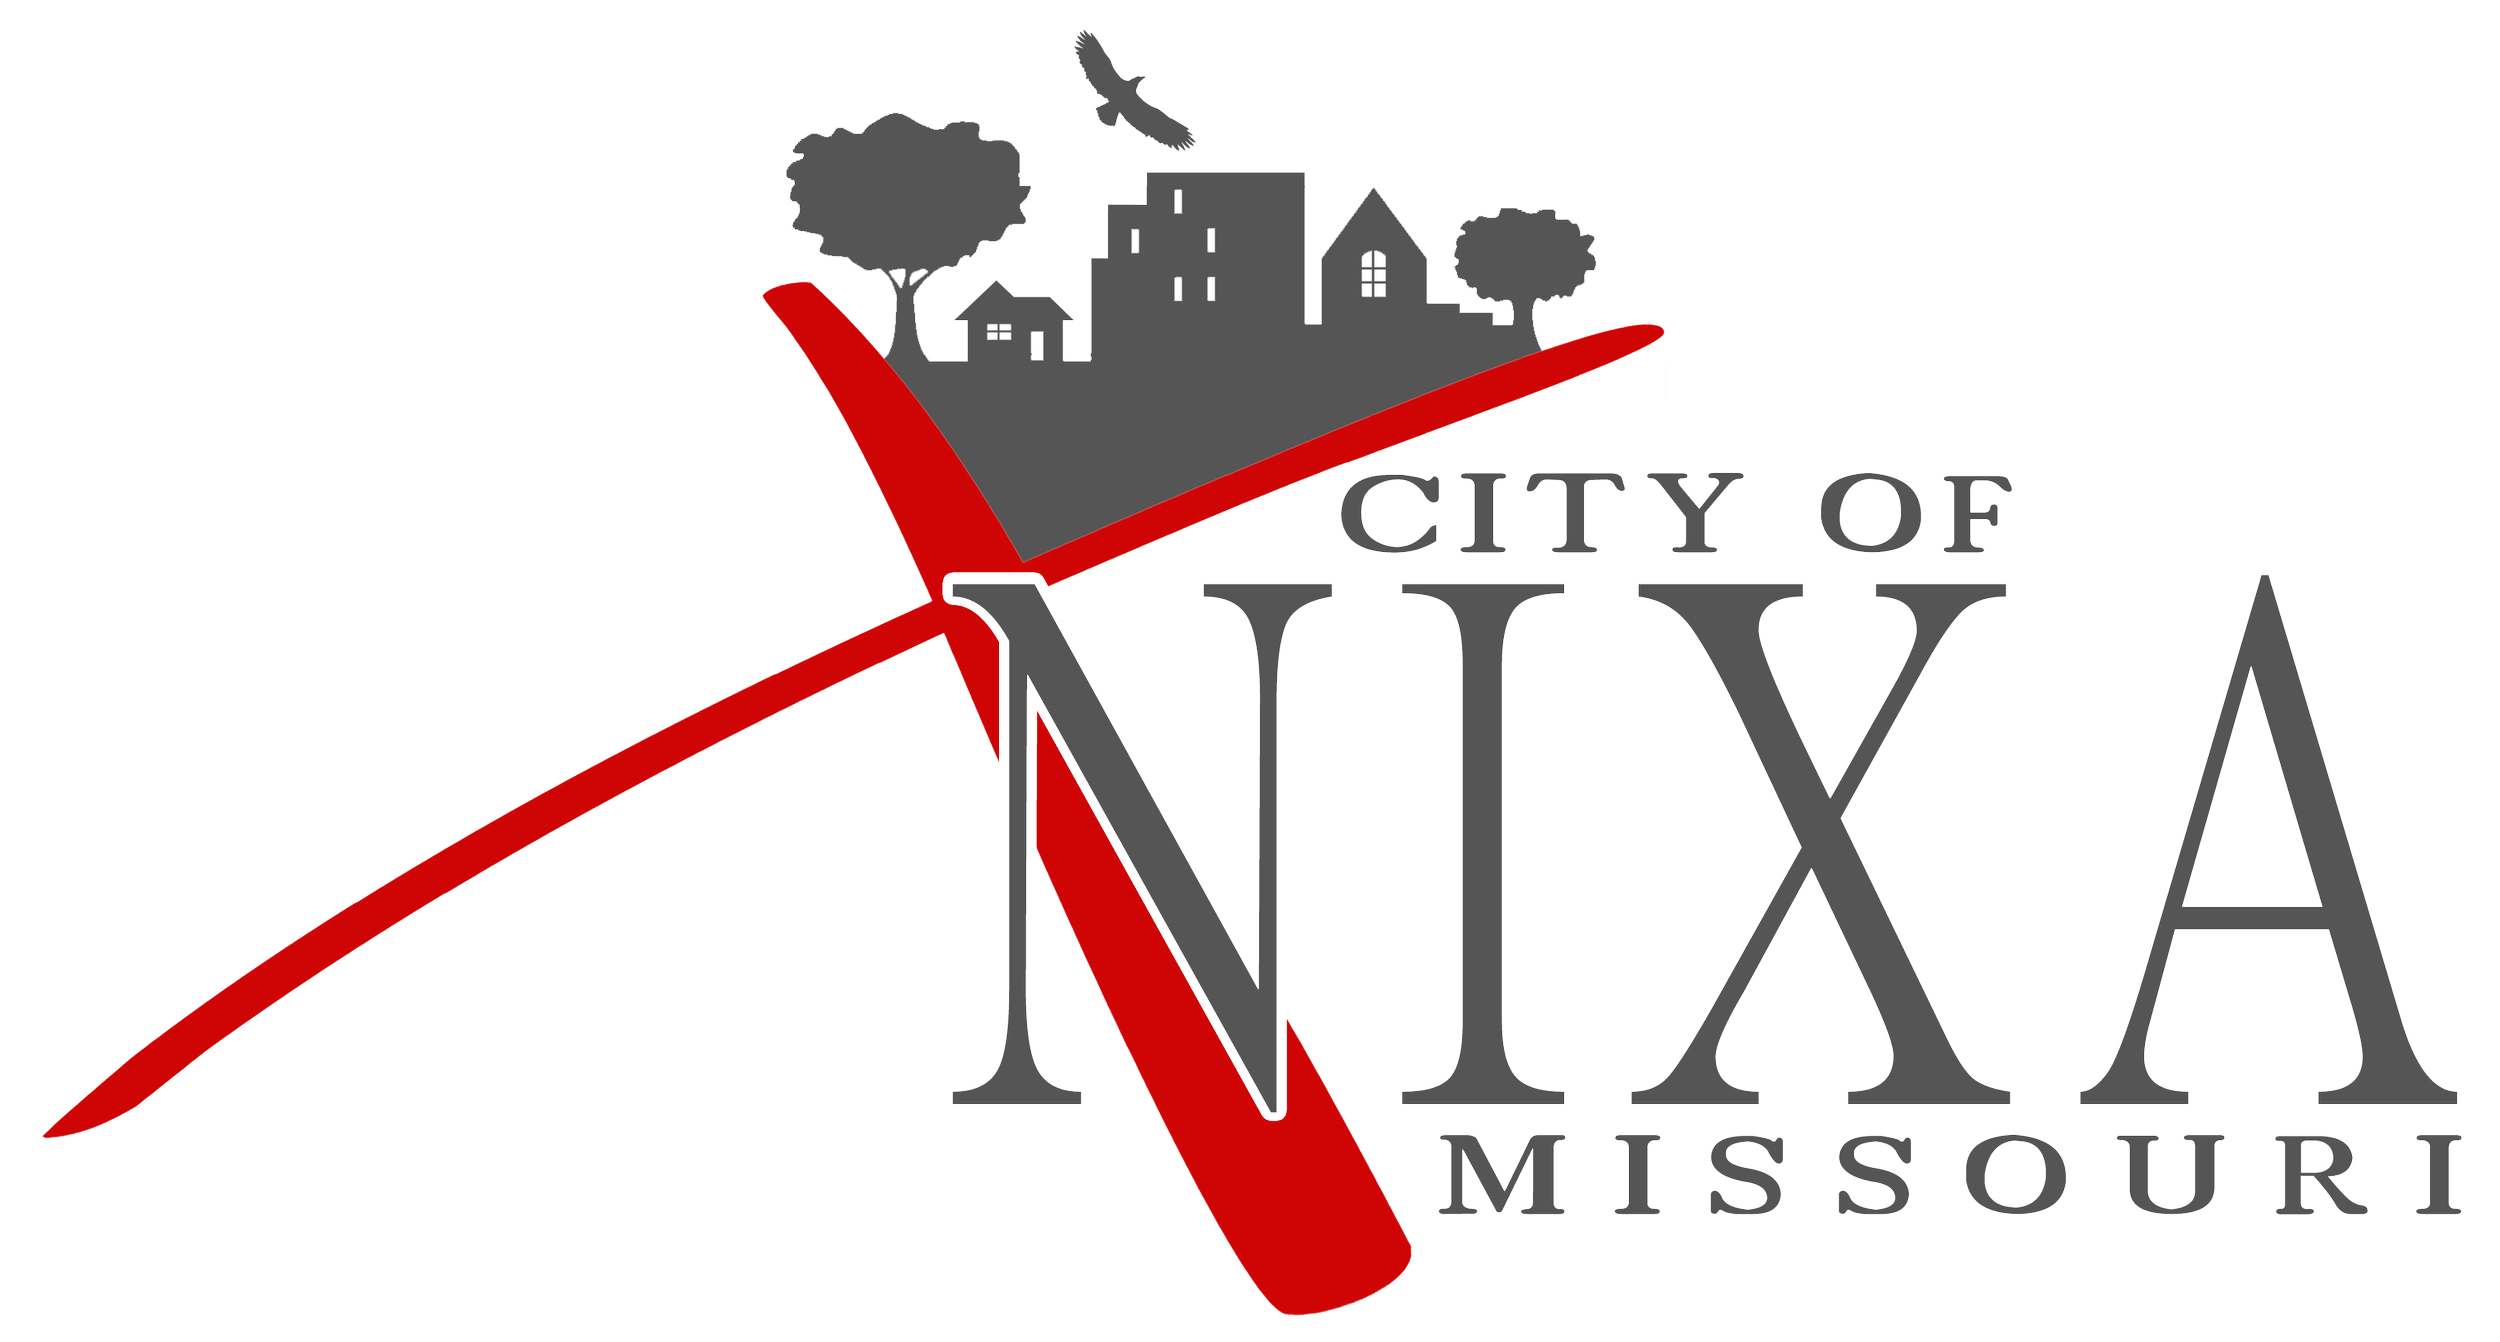 City of Nixa logo.png